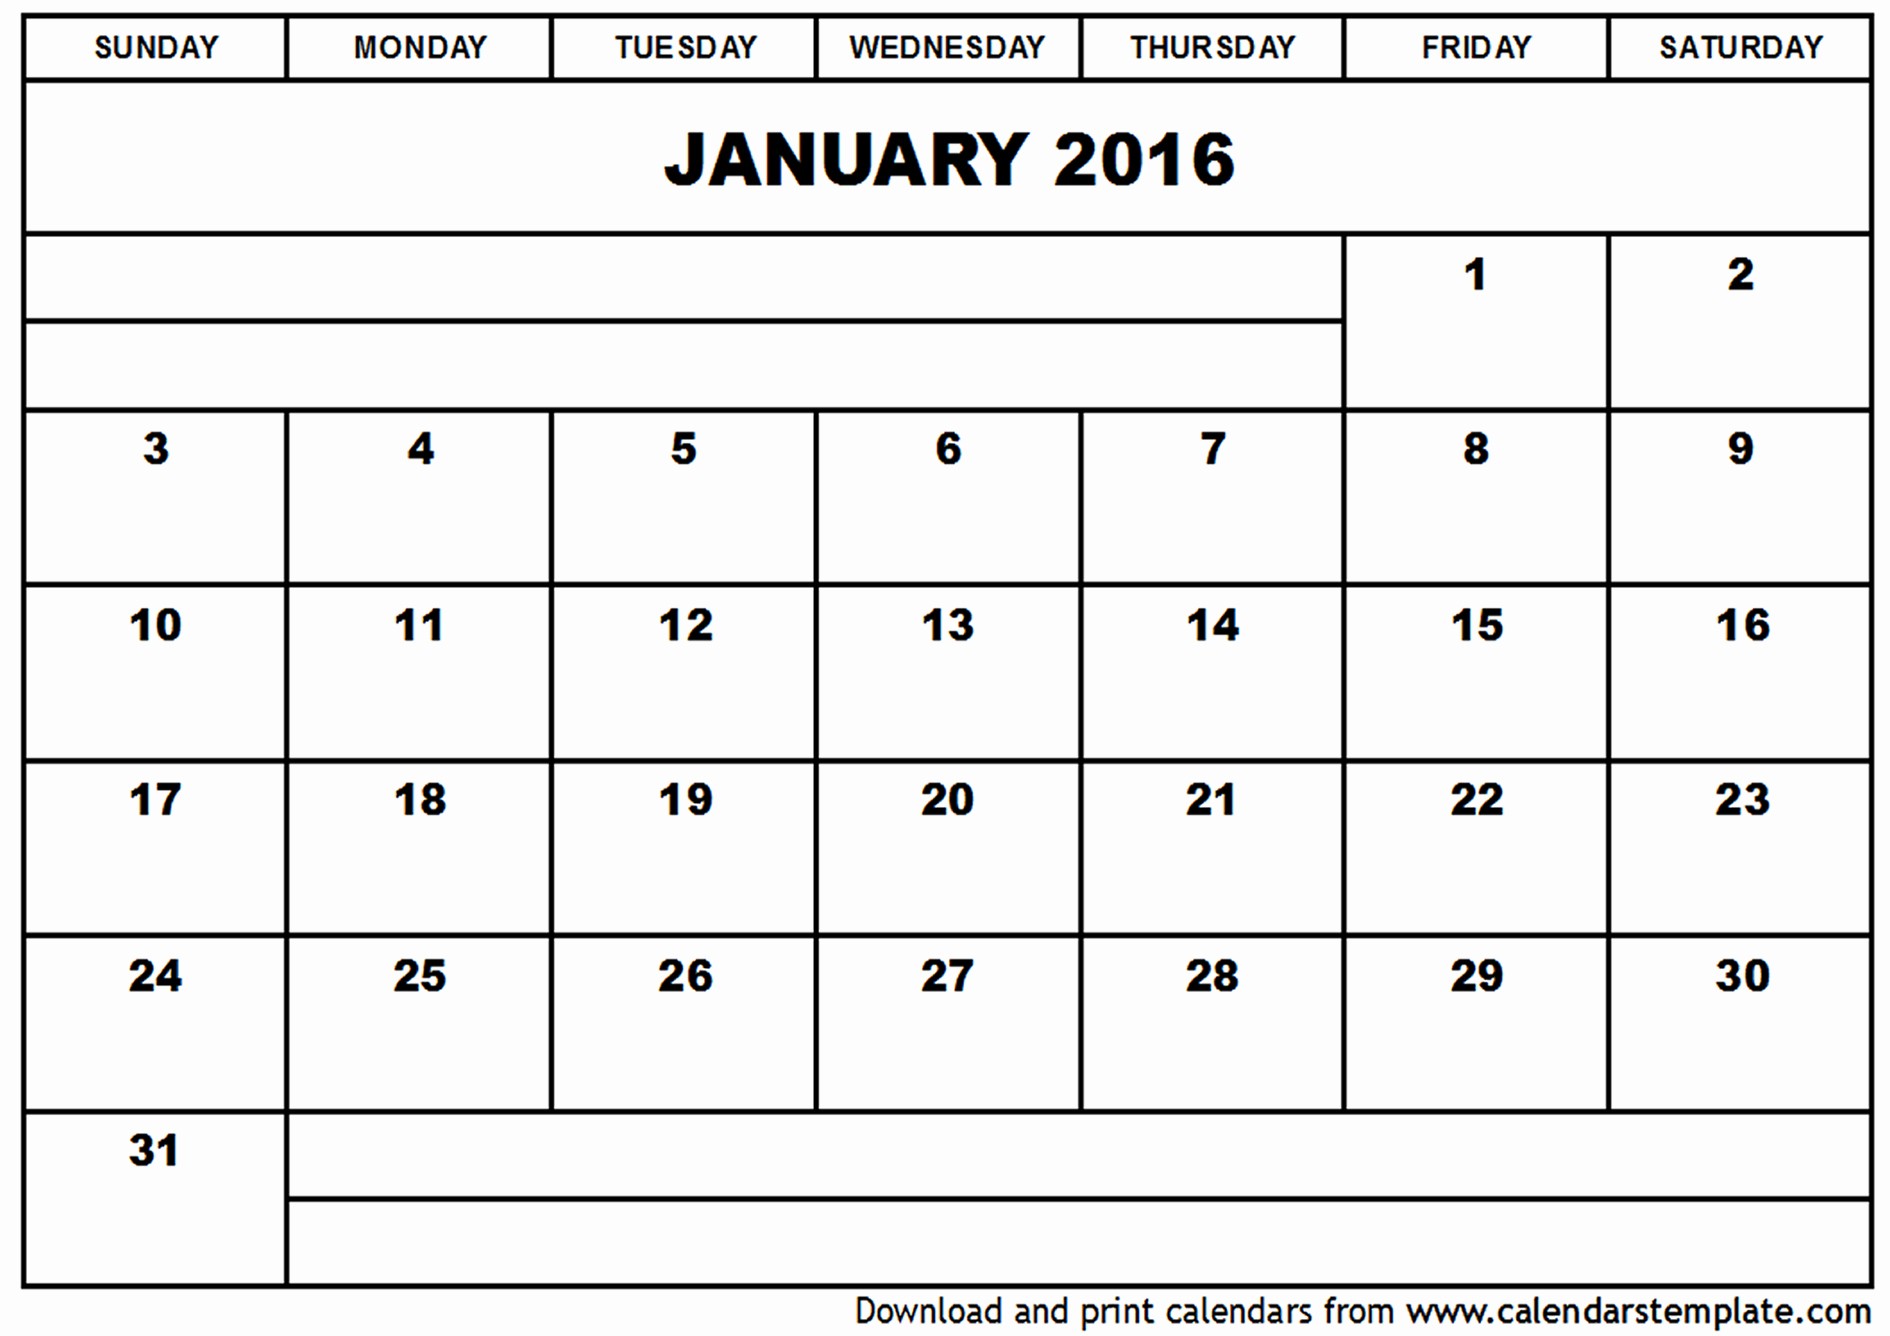 Free Printable Calendar 2016 Template New January 2016 Calendar Template